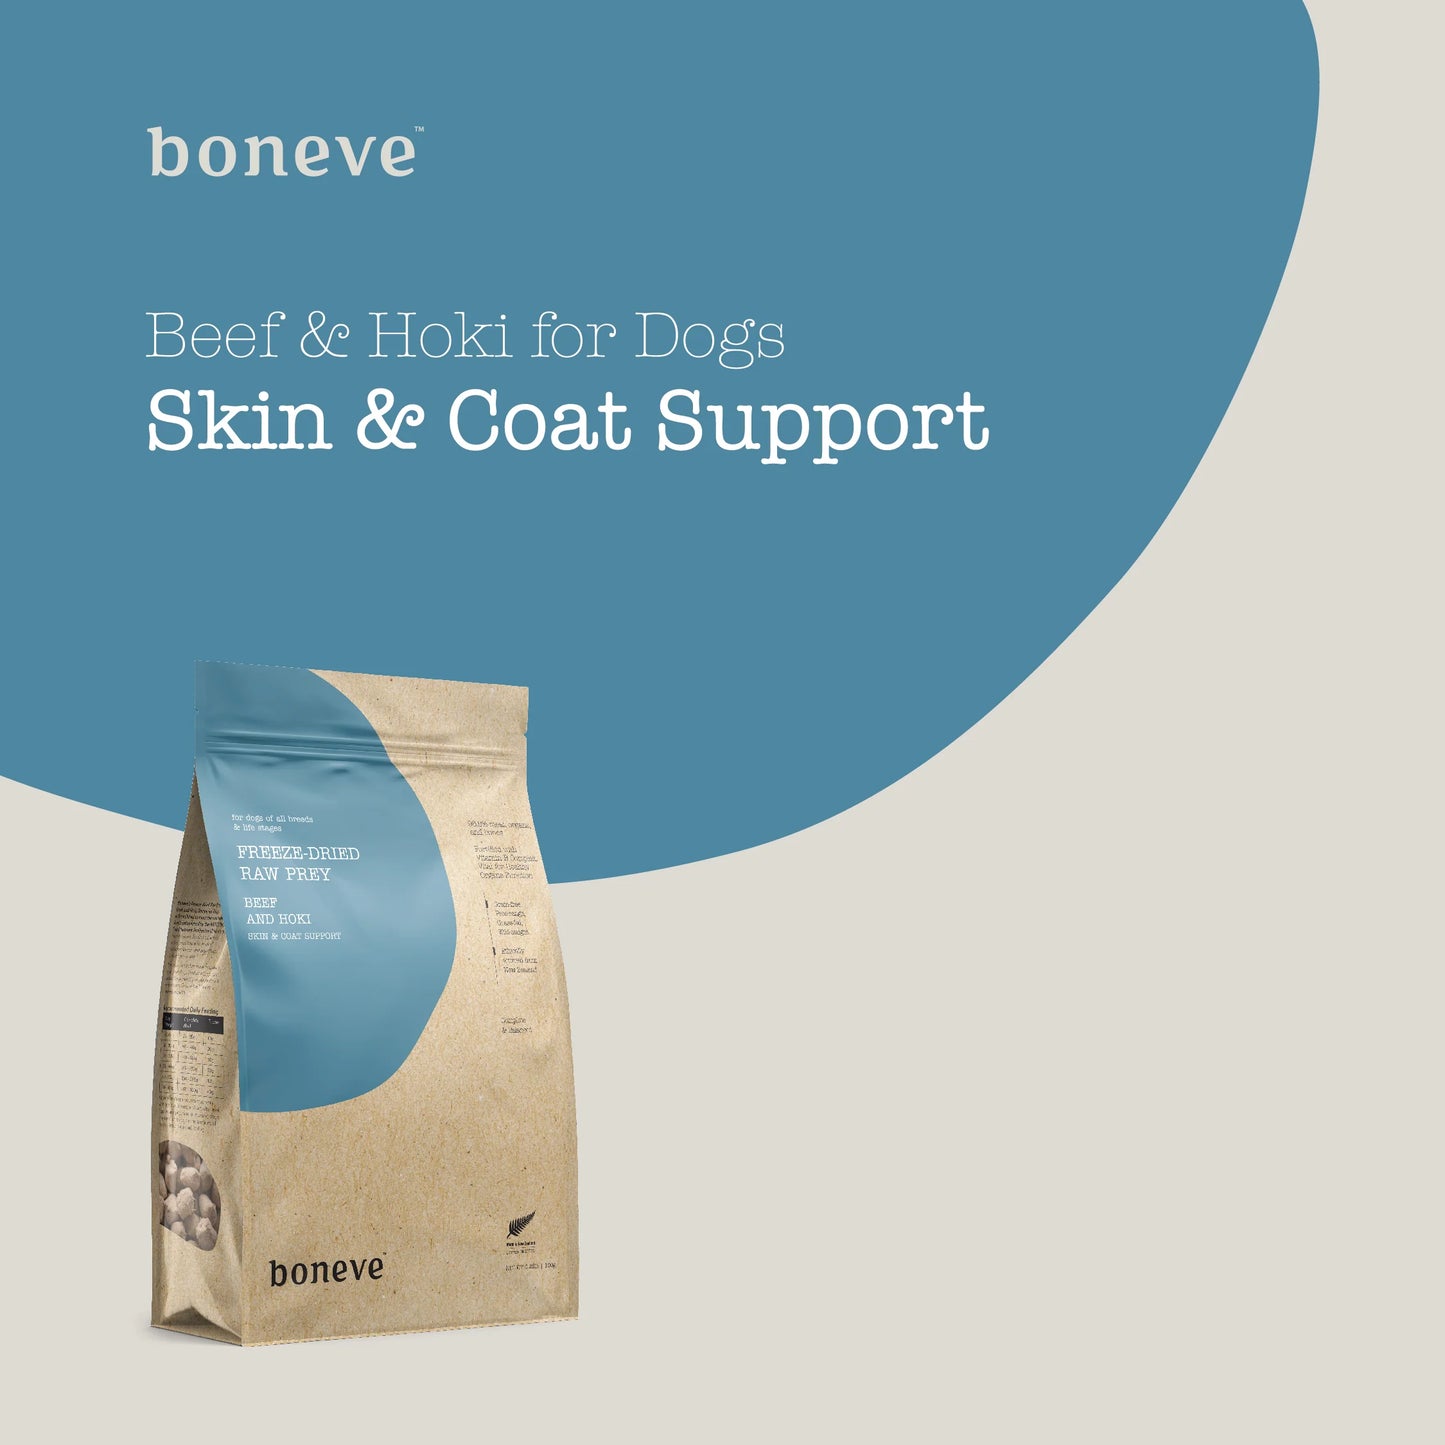 Boneve - The Best of Boneve - Dog Bundle